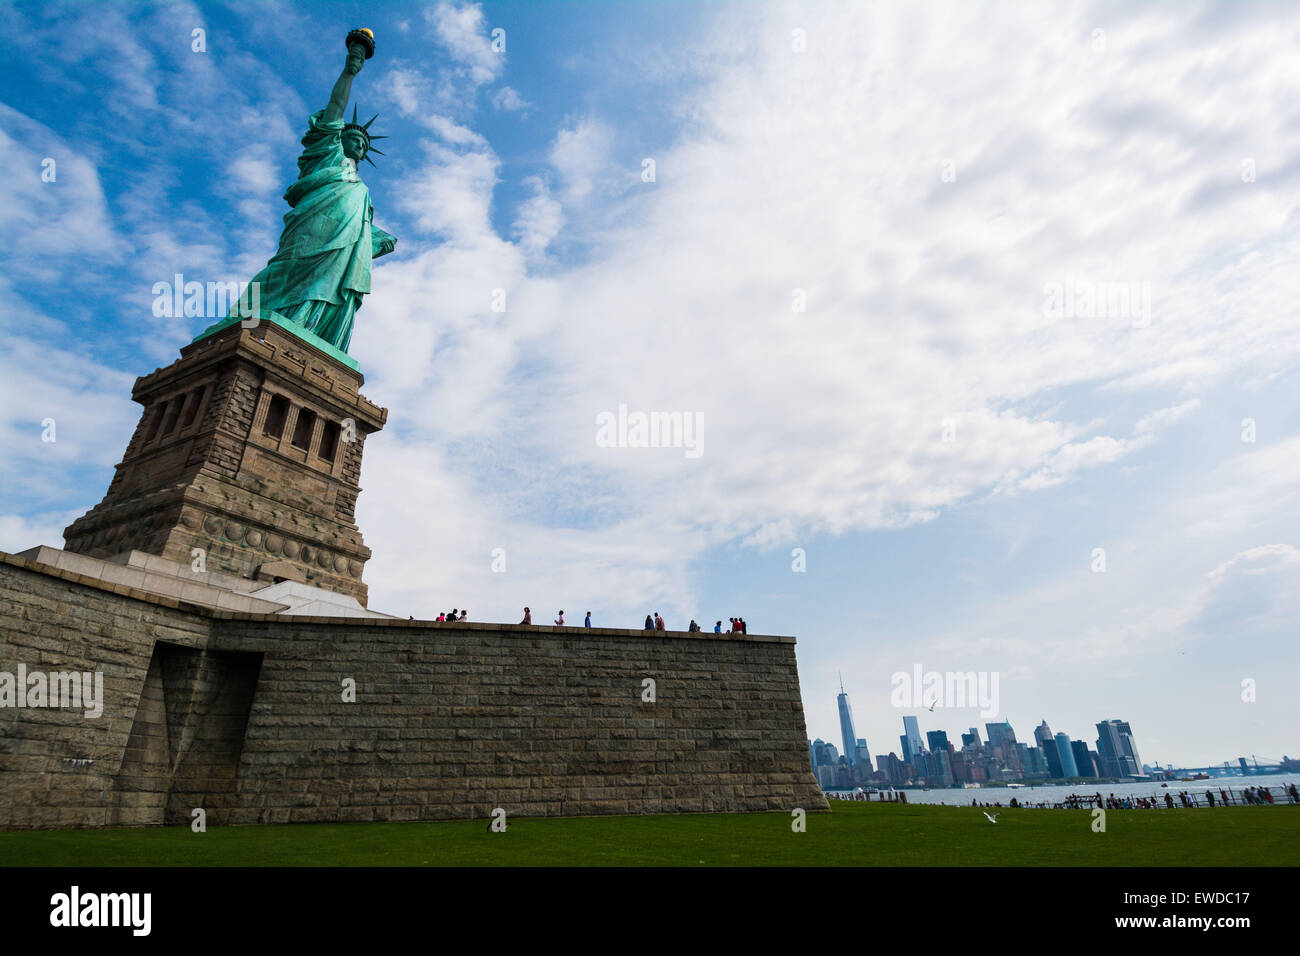 Statue of Liberty, Liberty Island, New York Harbor, New York City, New York, USA Stock Photo